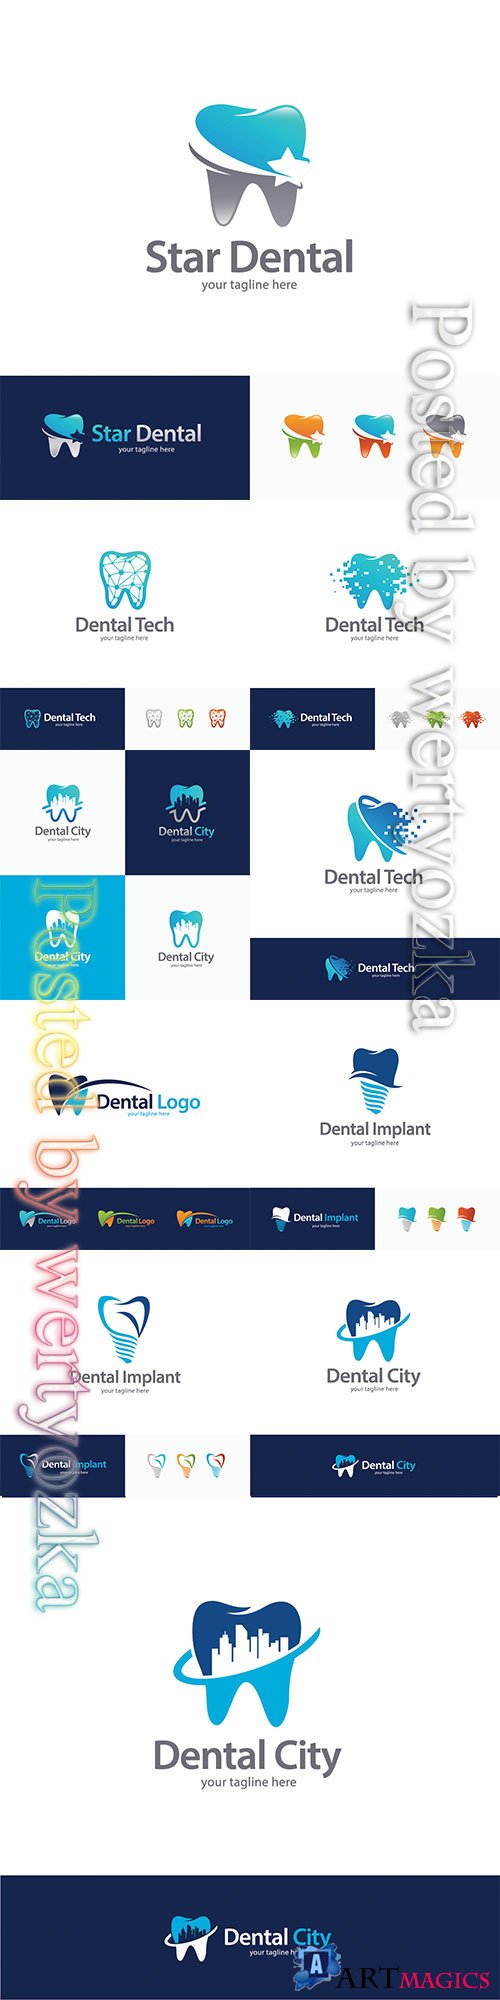 Dental logo collection vector illustration